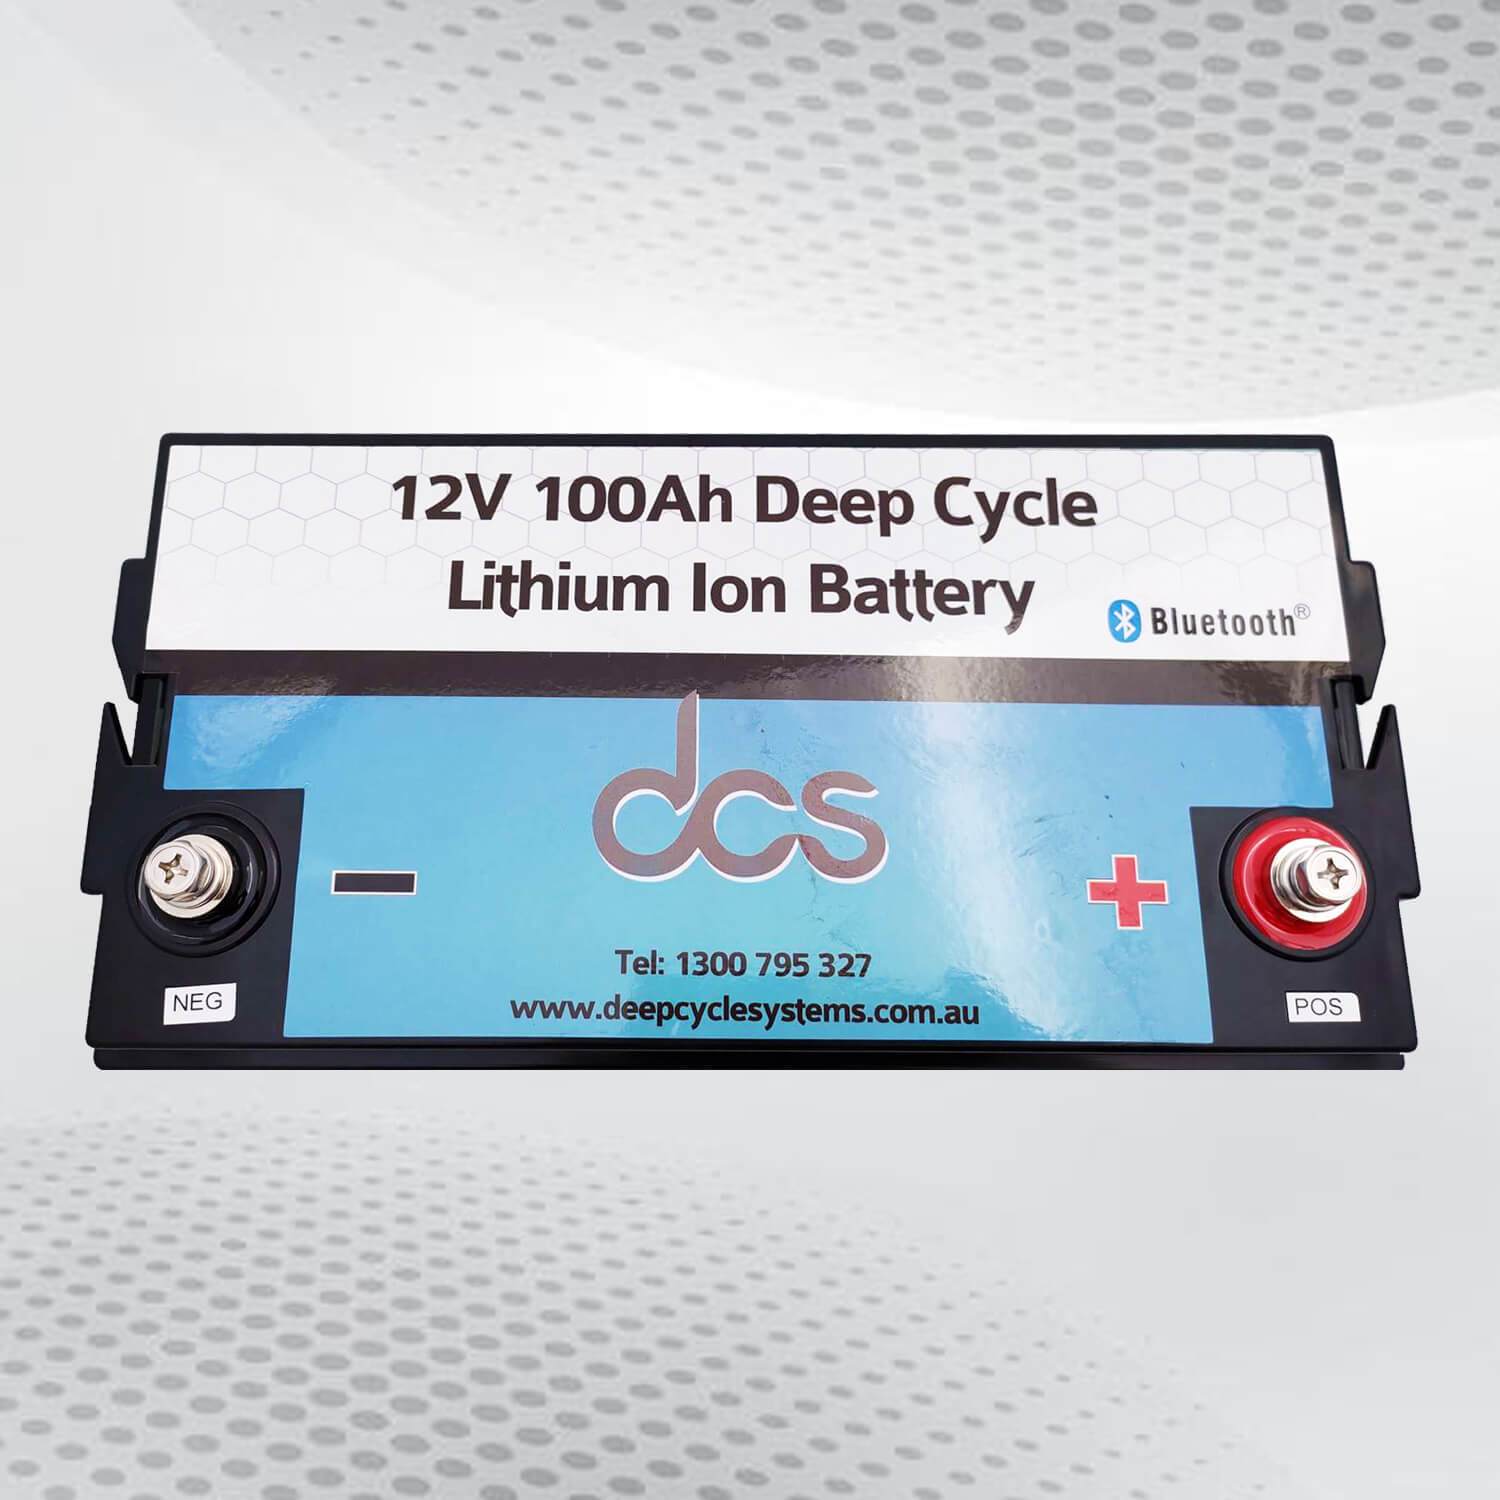 DCS 12V 100AH (LITHIUM) Deep Cycle Systems | Deep Cycle Systems